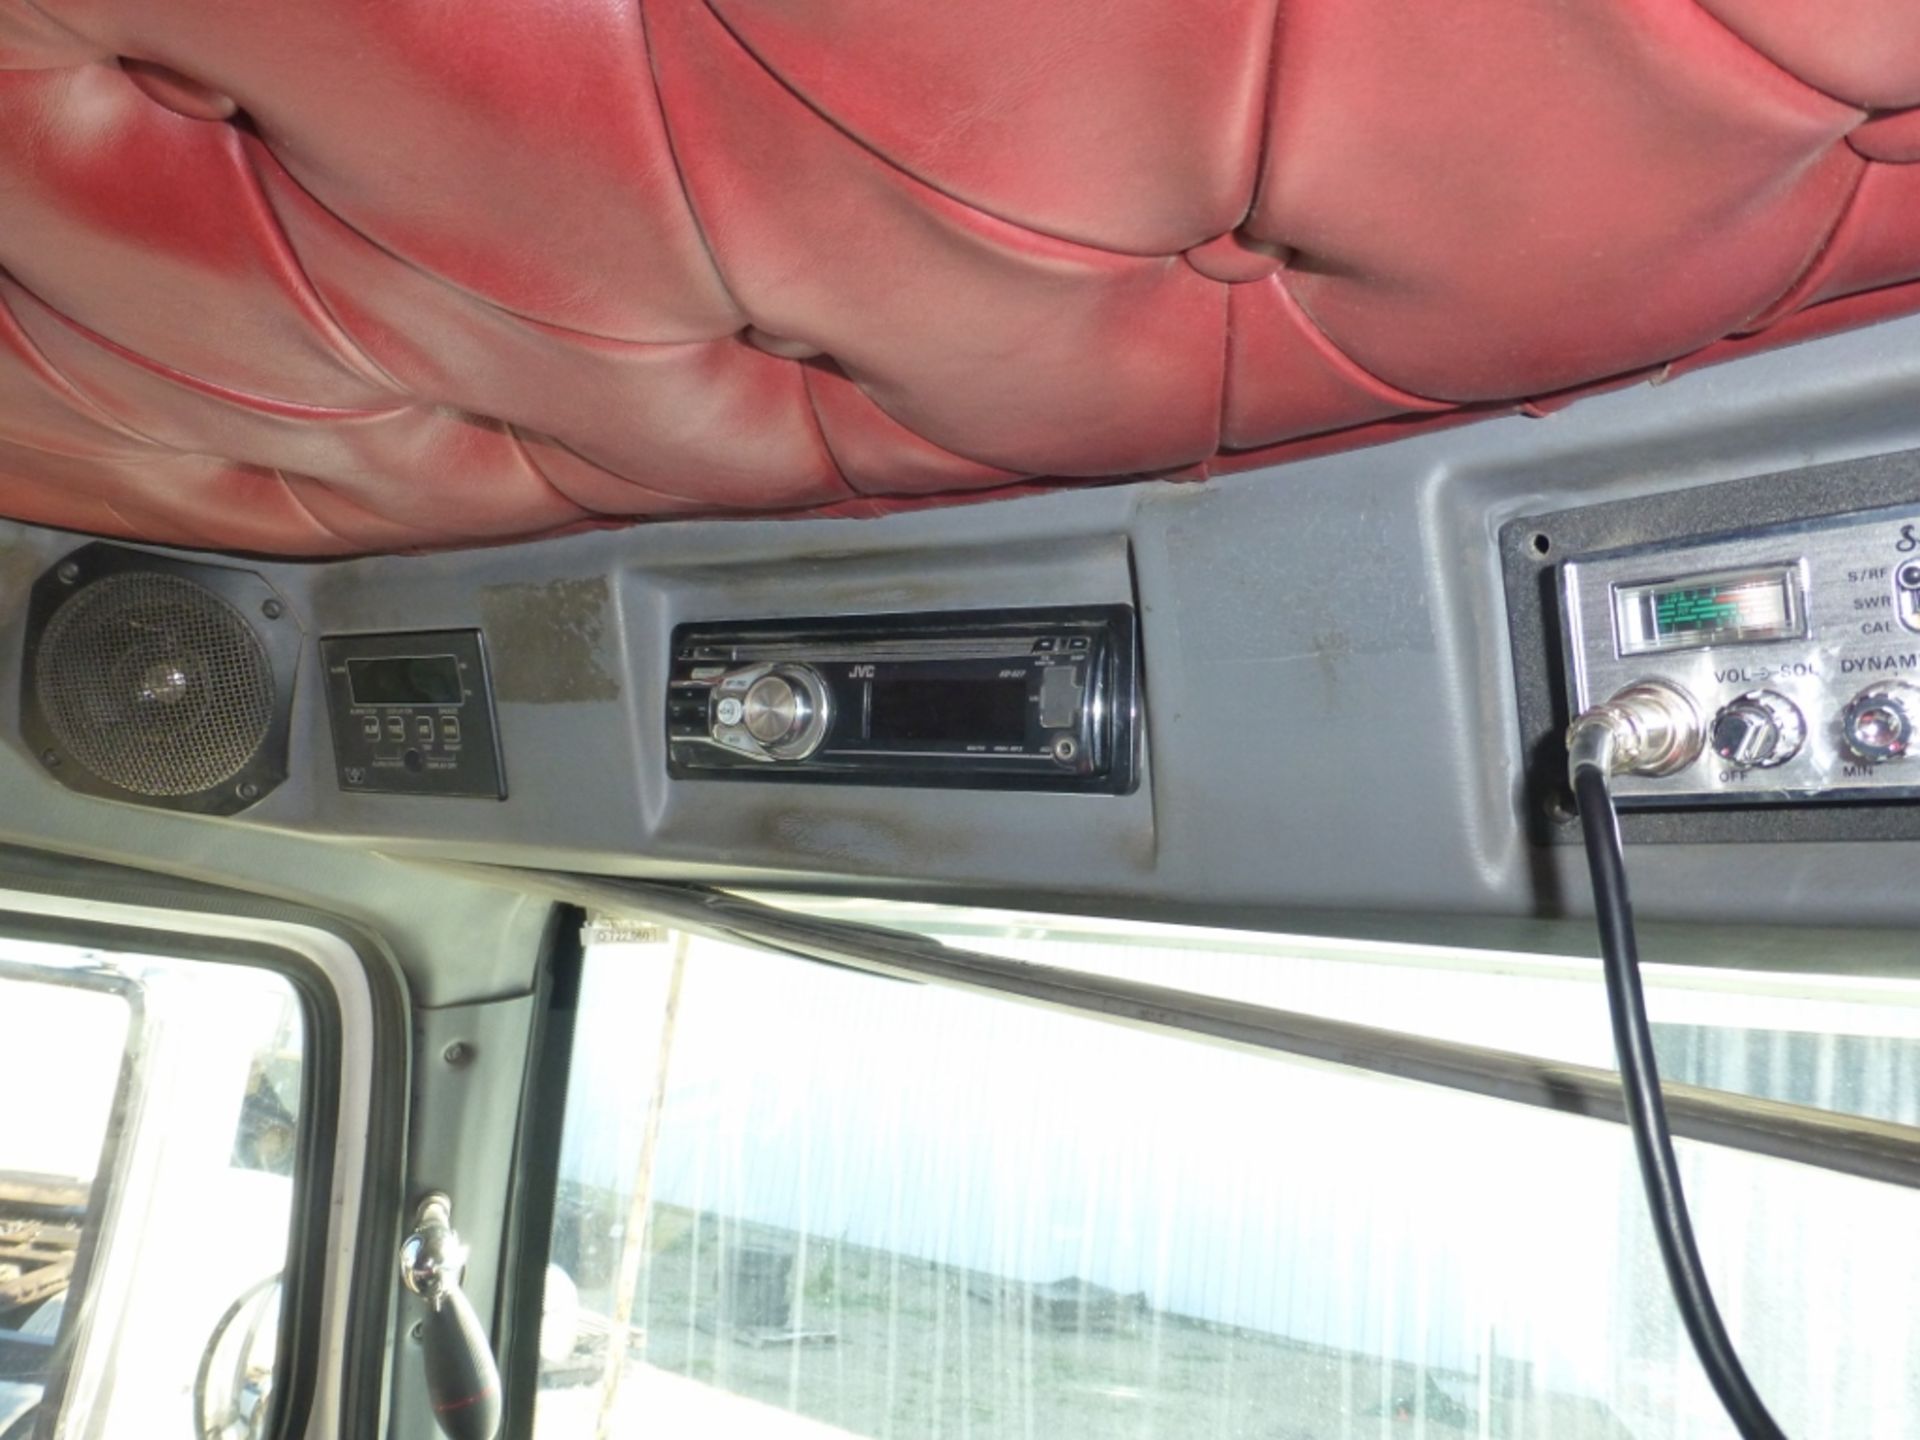 2006 Western Star 4900EX, Heavy haul day cab, 3 axle. 18 spd Eaton Fuller, Detroit ddc60-14. - Image 17 of 17